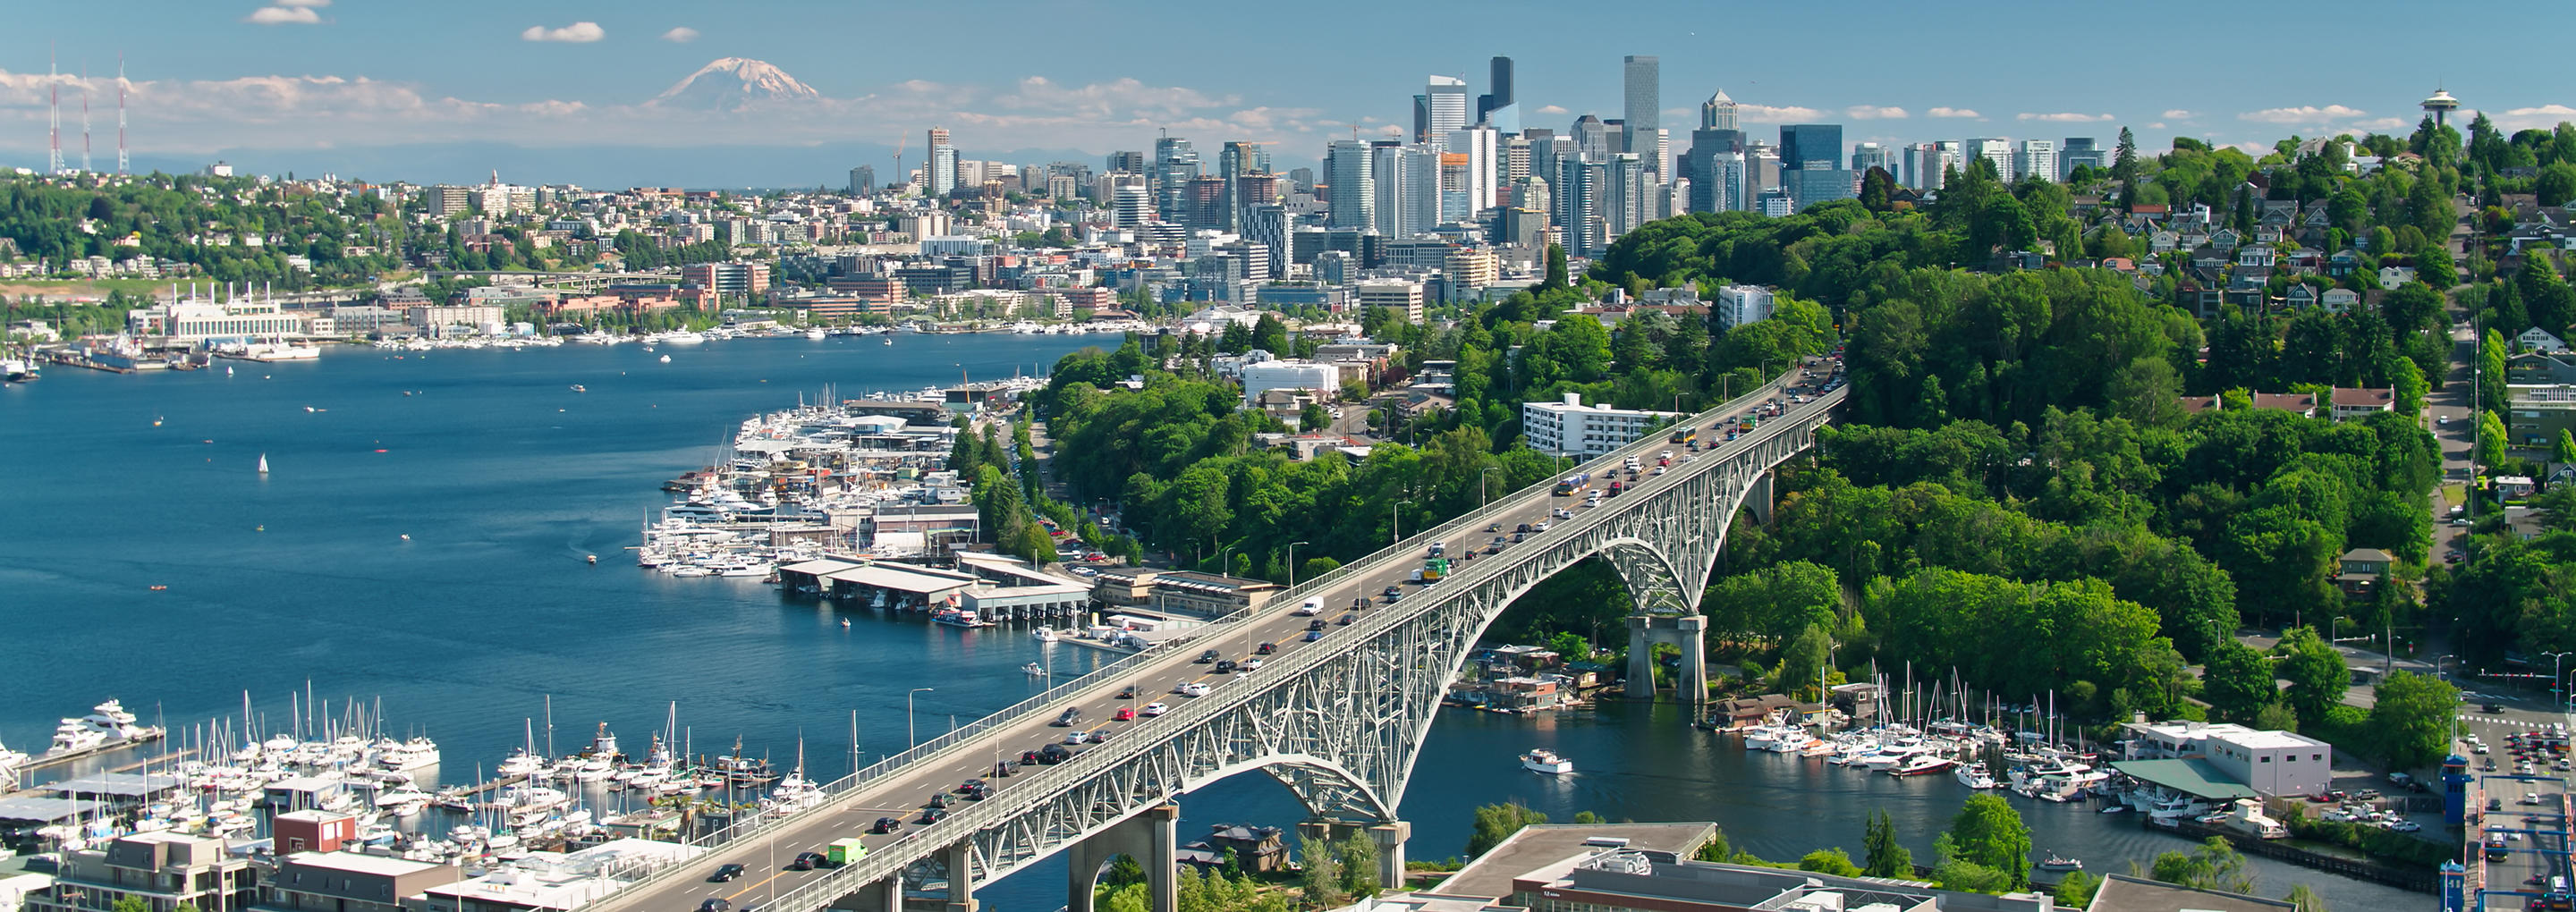 Bridge and Sound in Seattle Washington